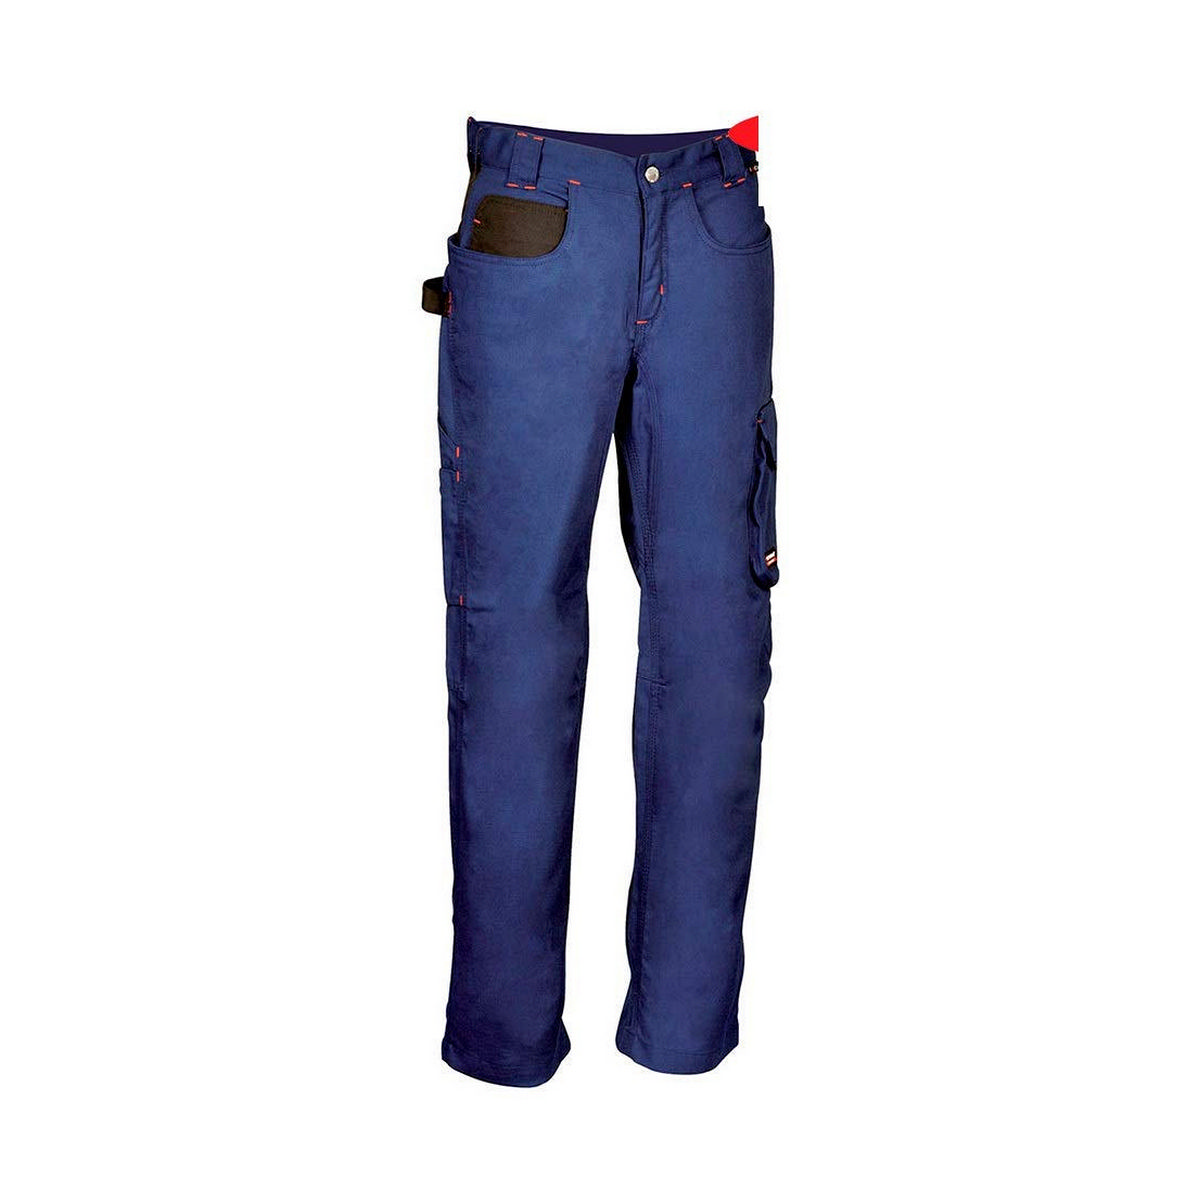 Pantaloni de siguranță Cofra Walklander Femeie Negru Bleumarin - Mărime 42